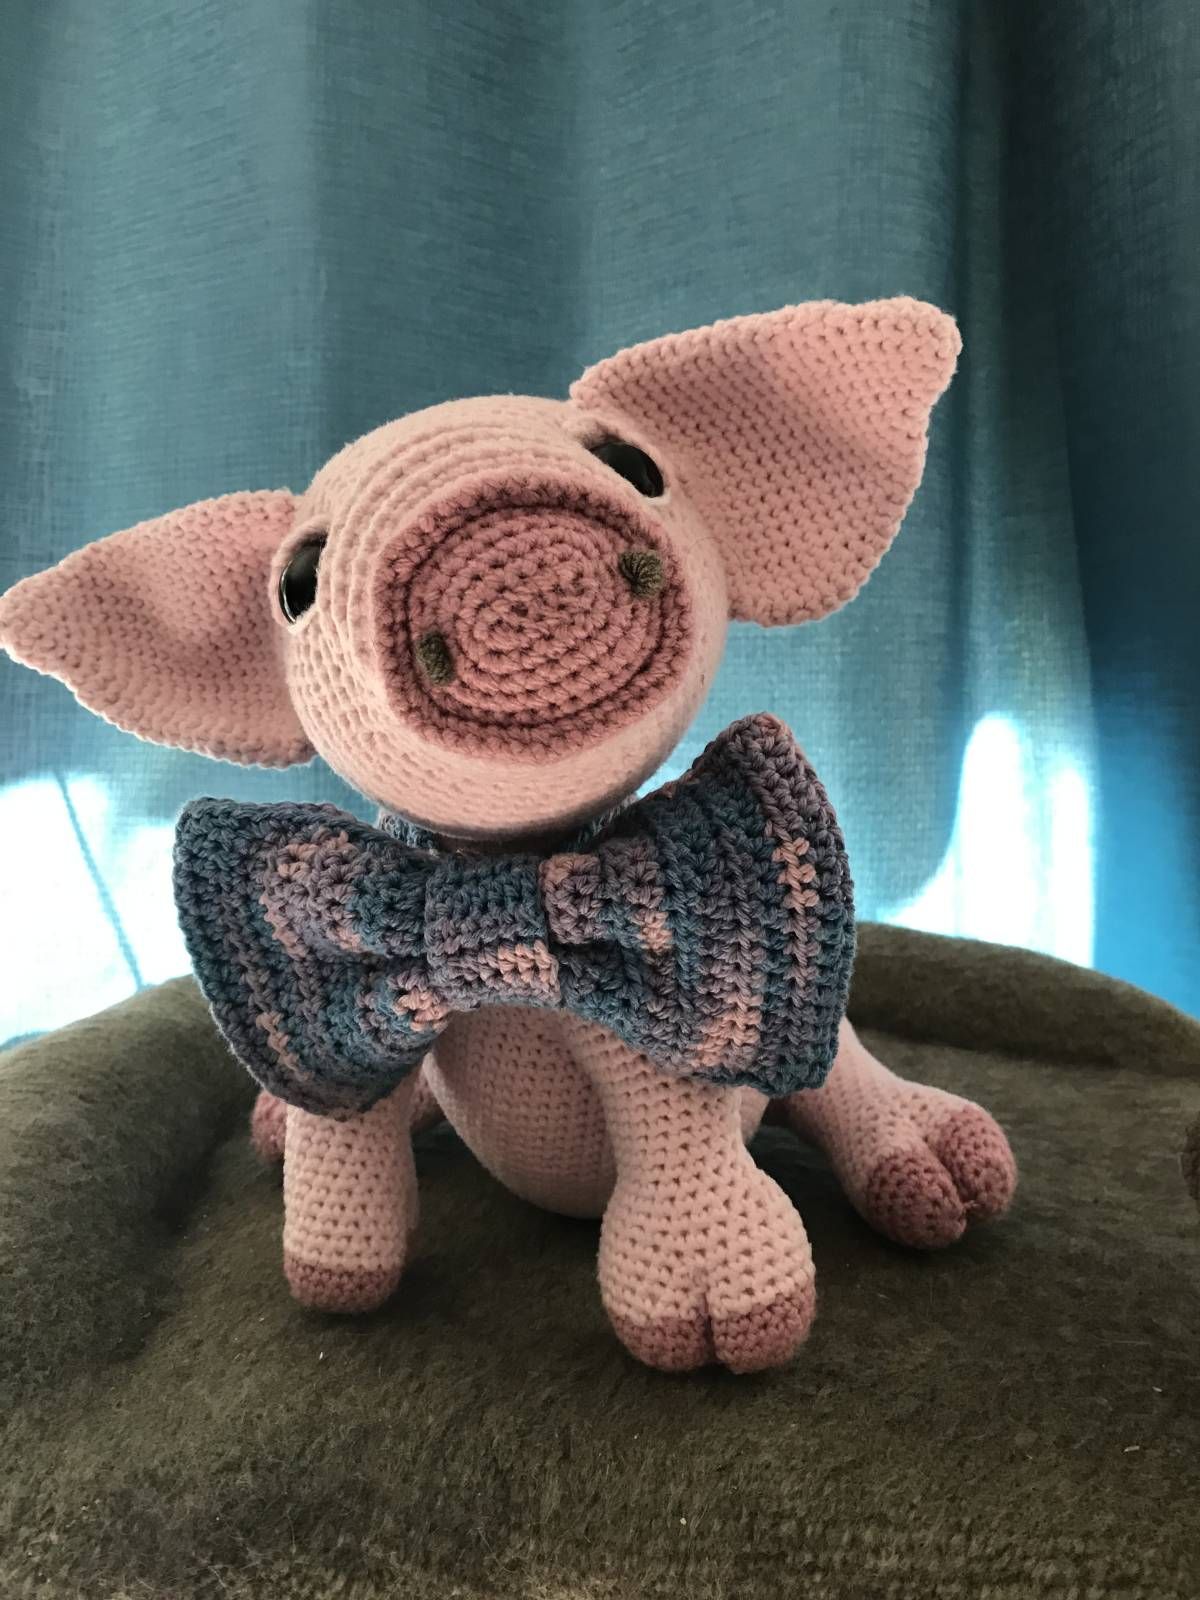 The pig piggy piglets photo review